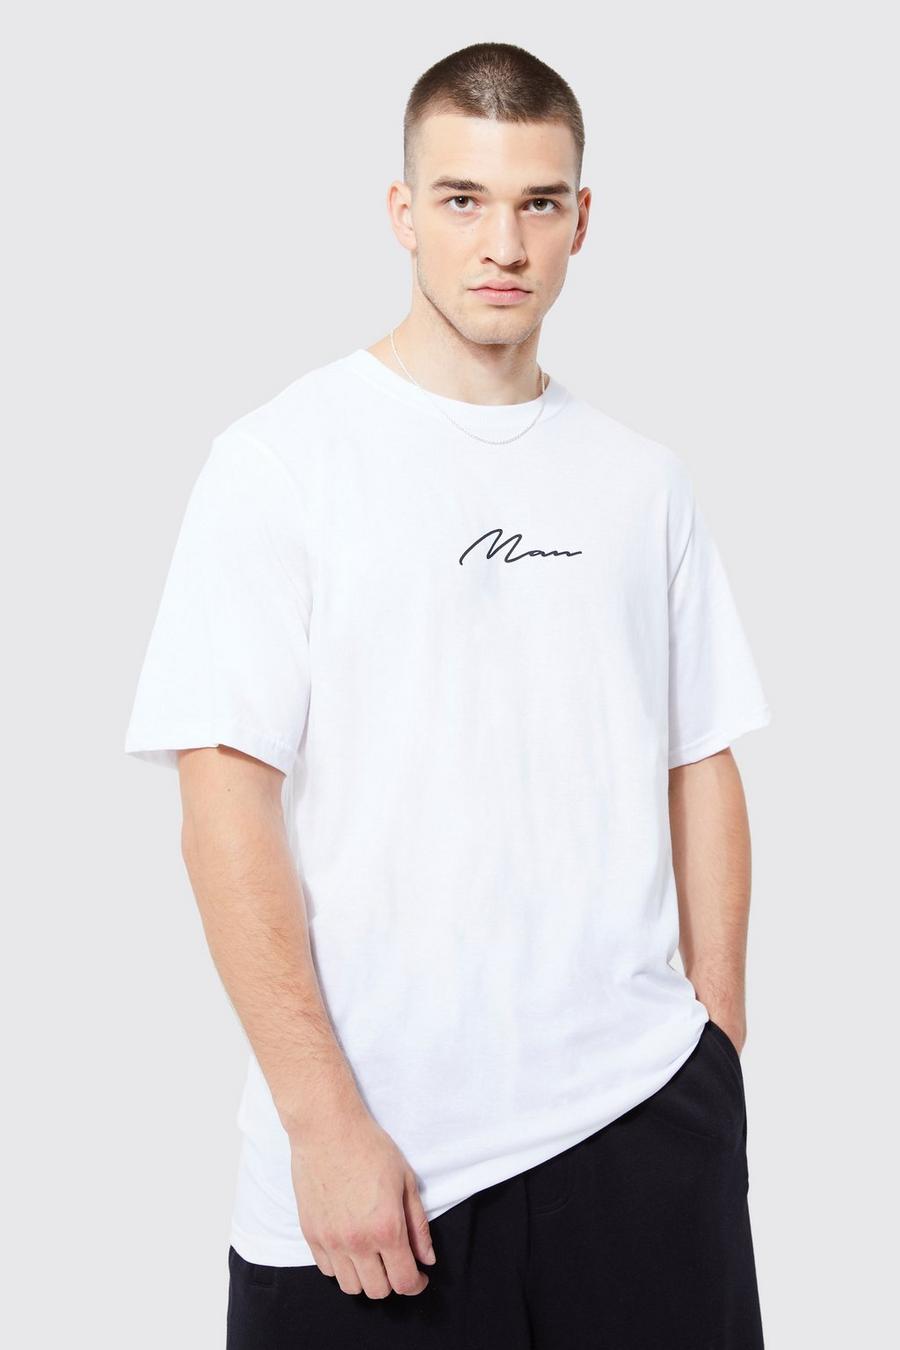 MAN Collection T-Shirts & Vests For Men | boohoo UK